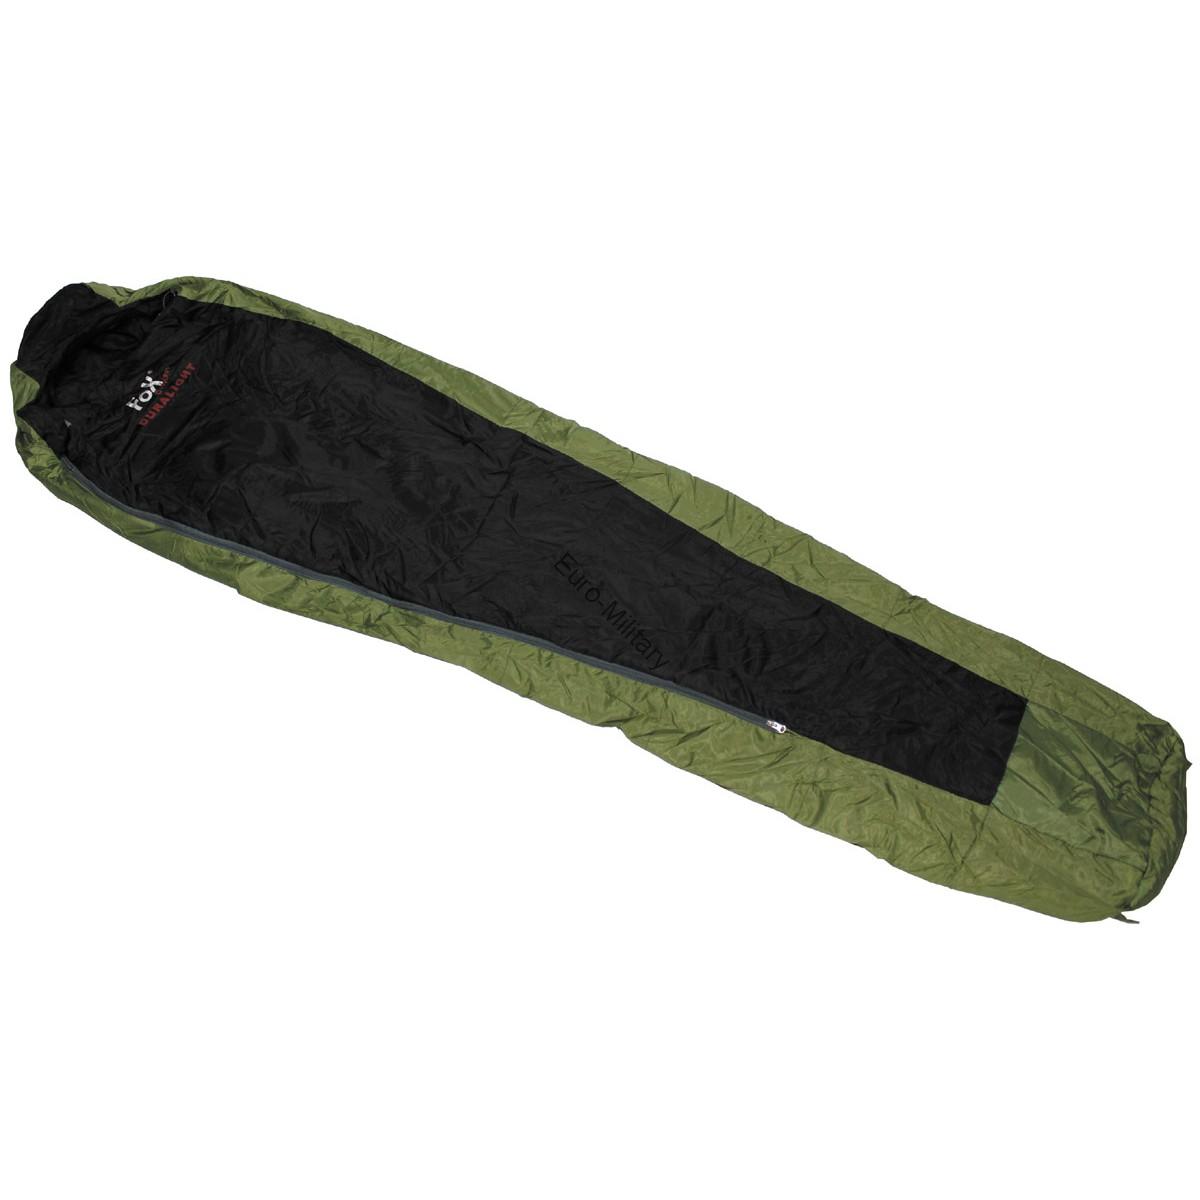 DuraLight Sleeping Bag +01 °C to +18 °C - Green/Black